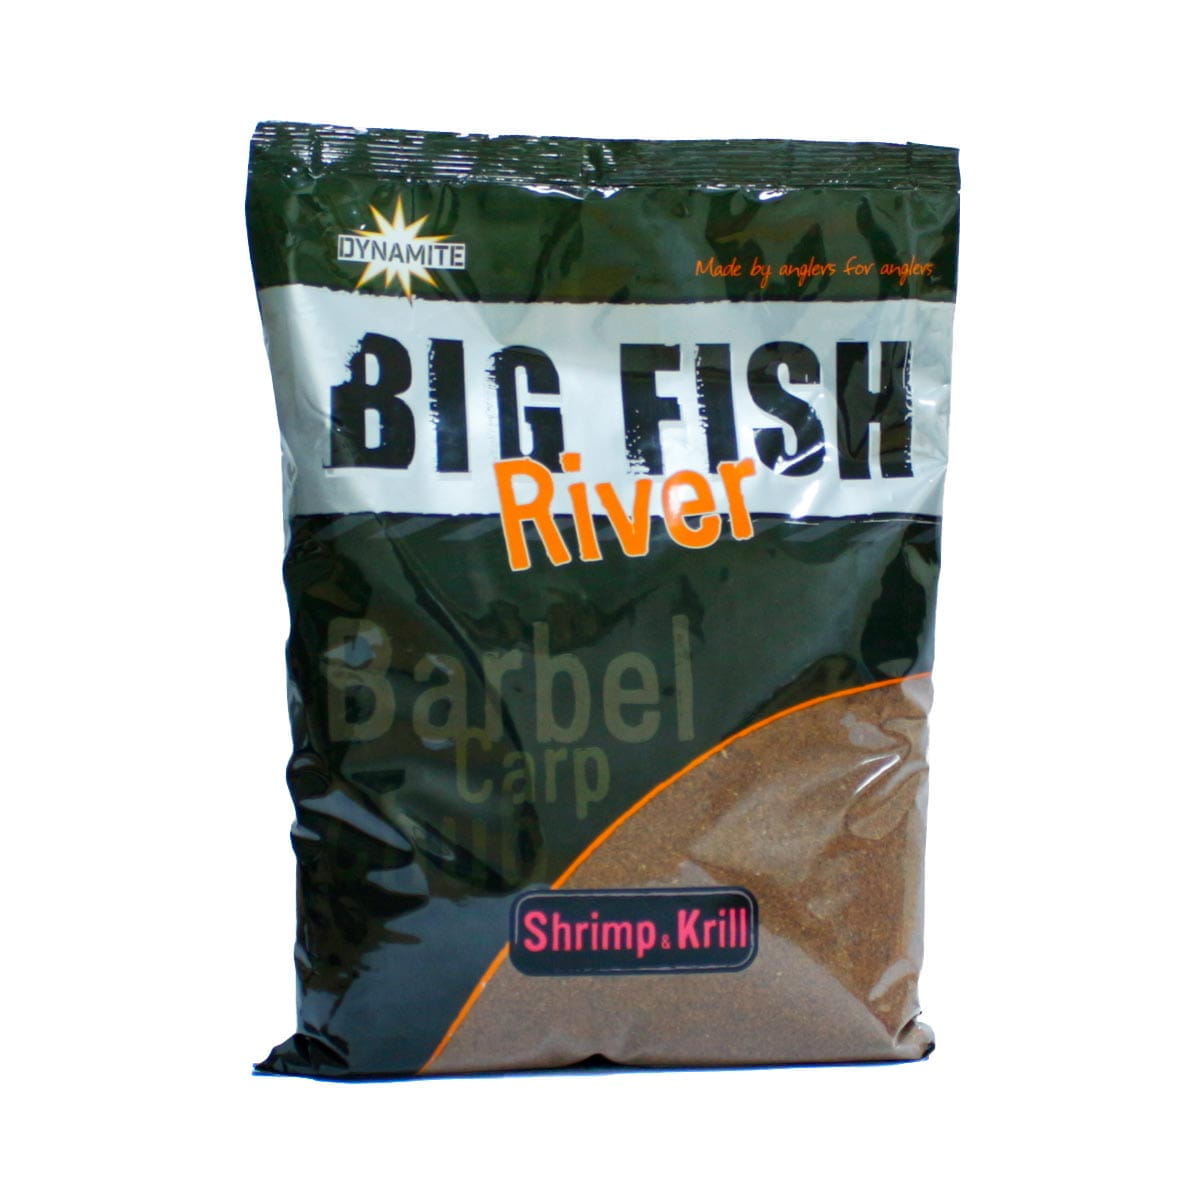 Big Fish River GB - Shrim & Krill